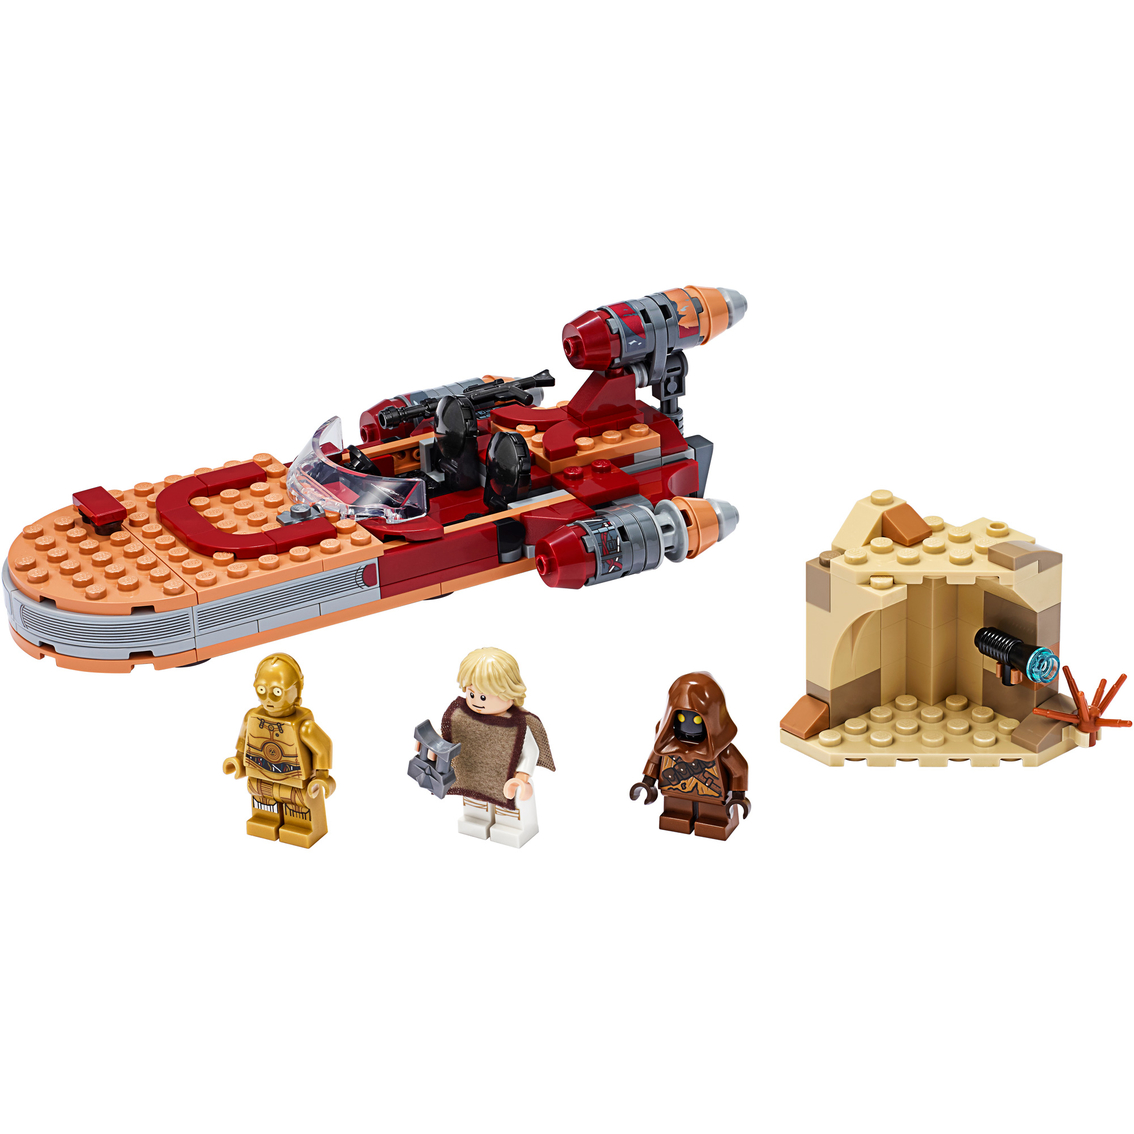 LEGO Star Wars Lukes X-34 Landspeeder - Image 2 of 2